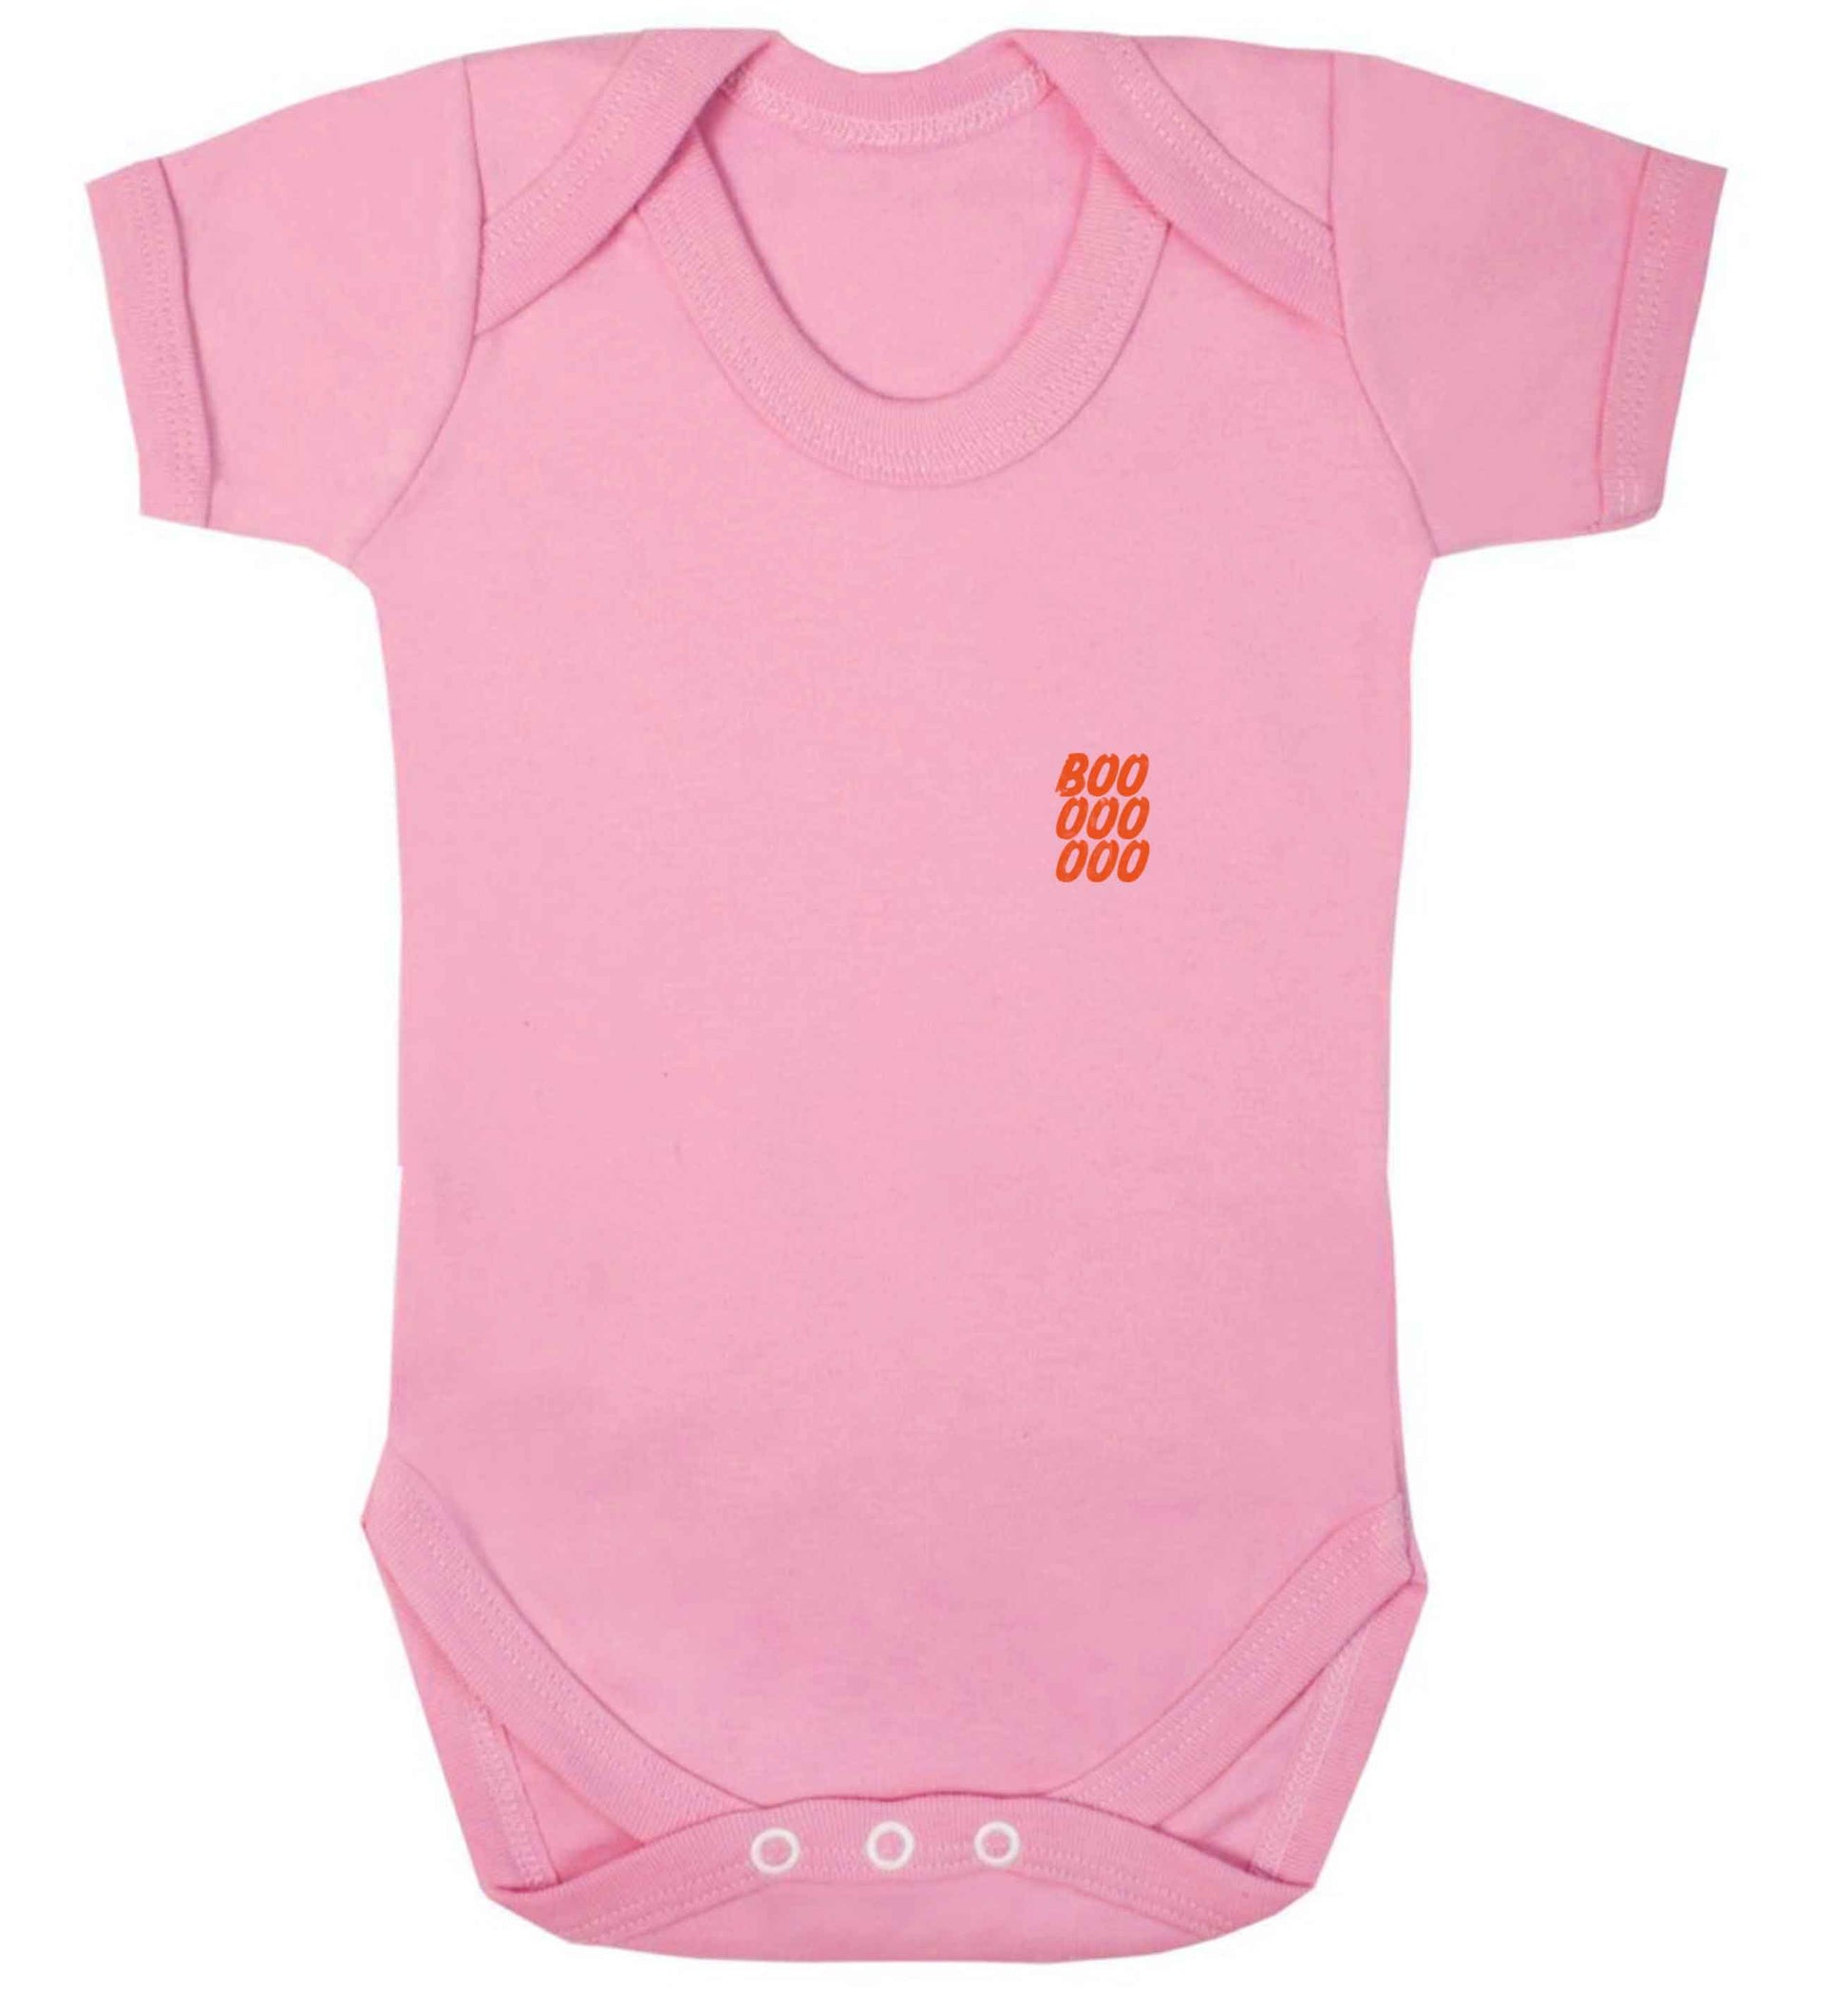 Boo pocket baby vest pale pink 18-24 months